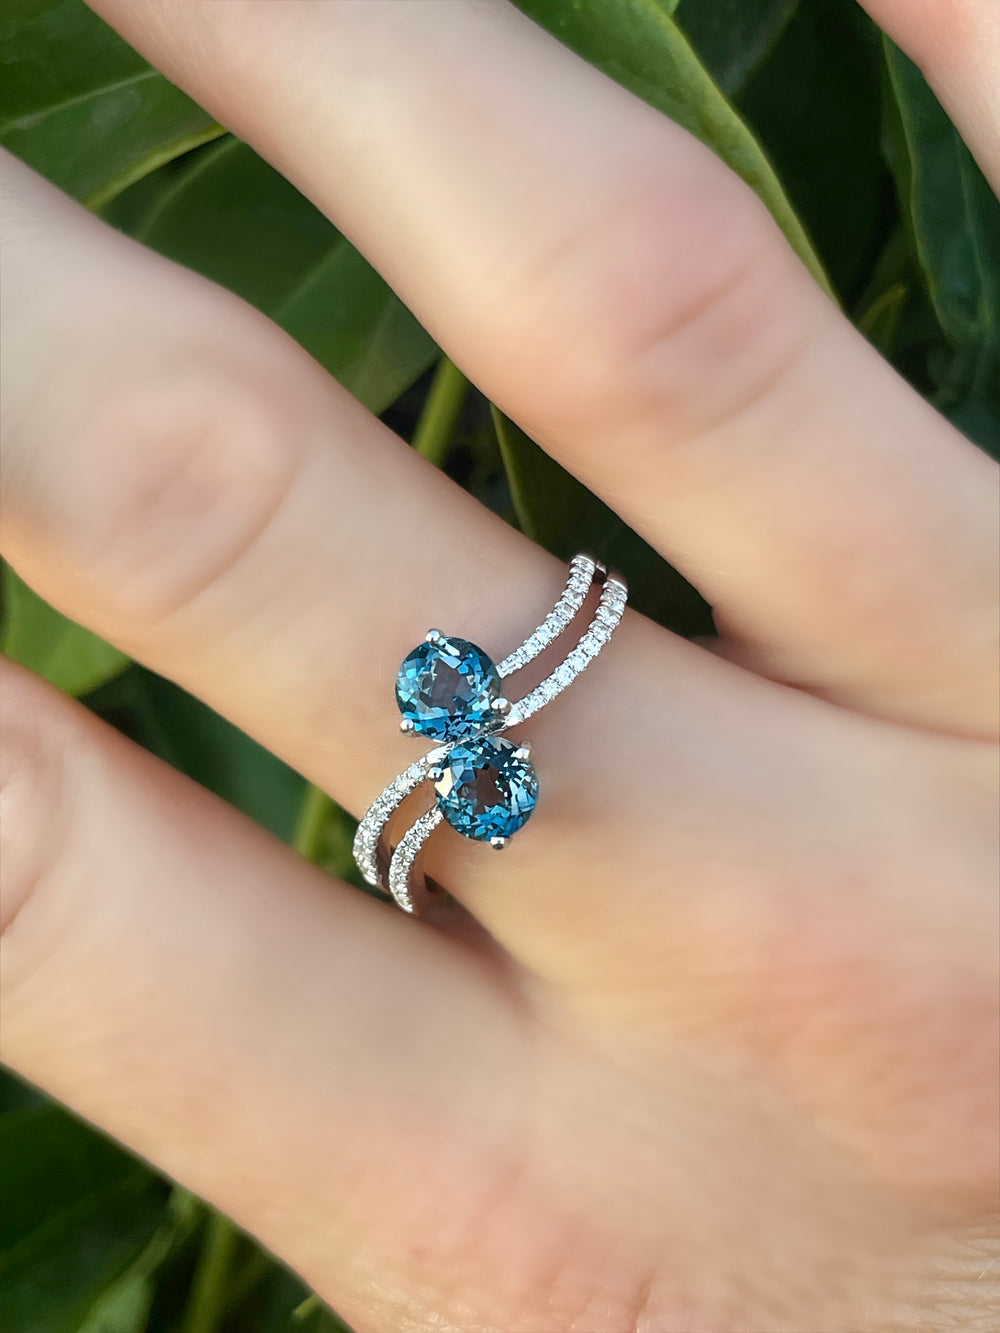 Beautiful Blue Topaz and Diamond Ring-on hand